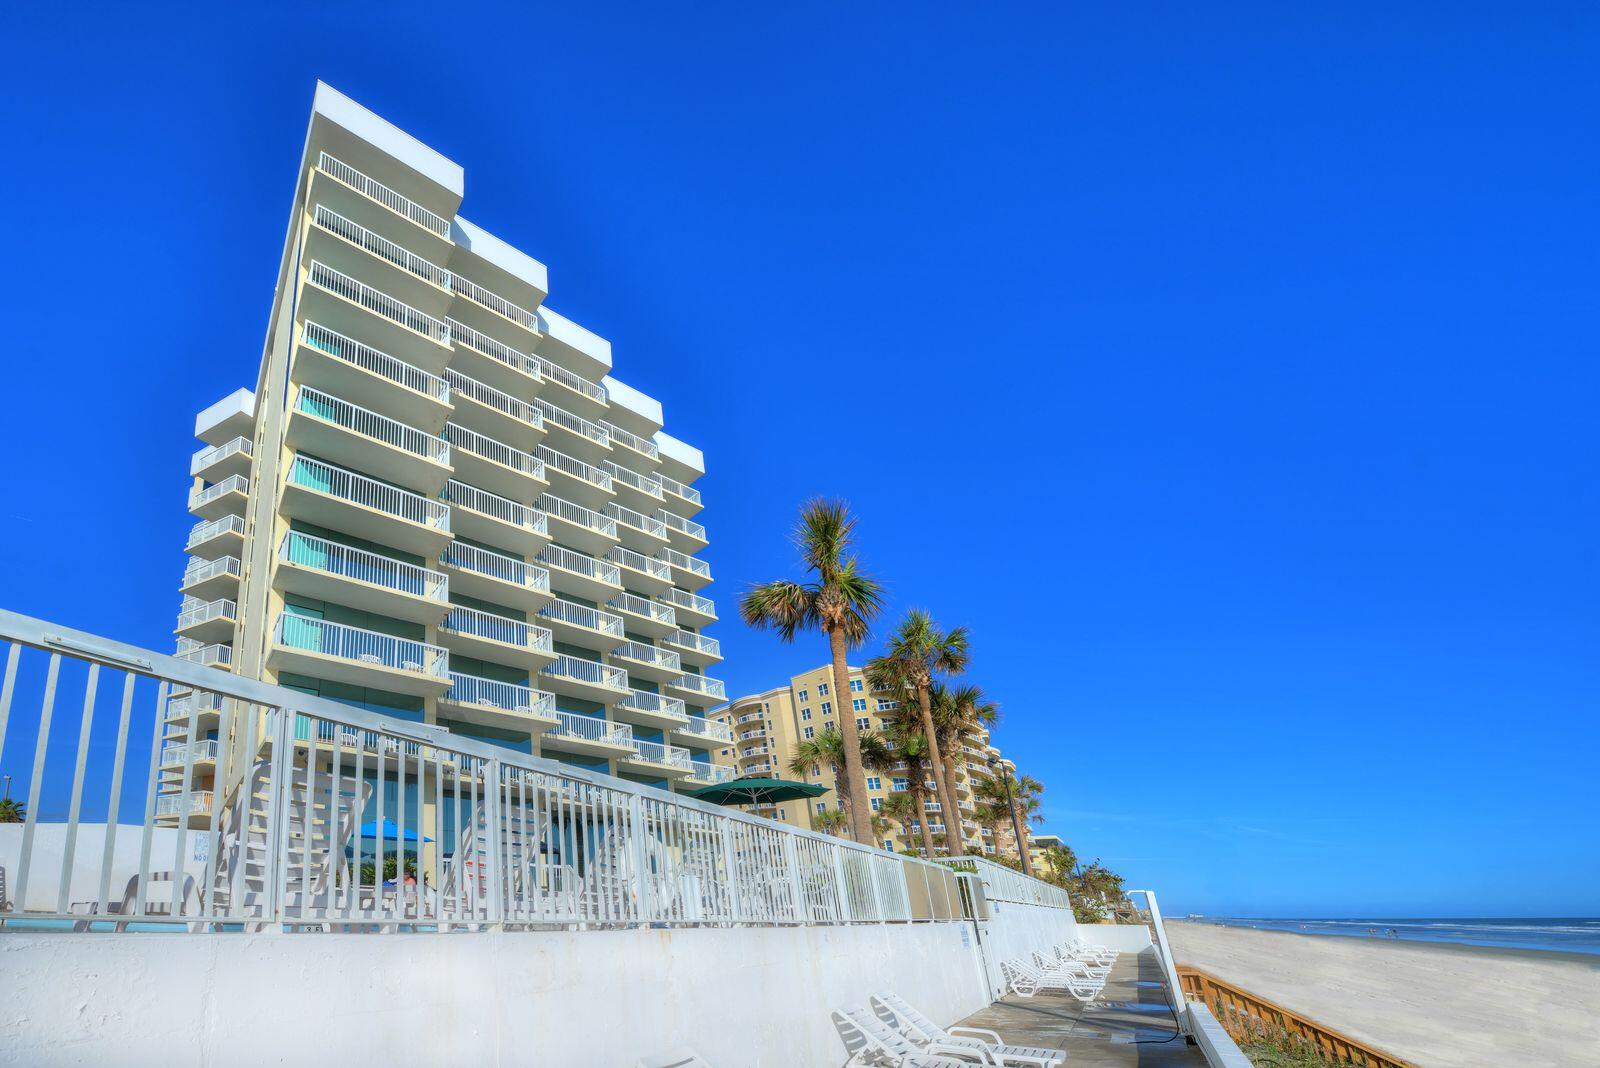 Astounding Photos Of Bahama House Daytona Beach Reviews Concept